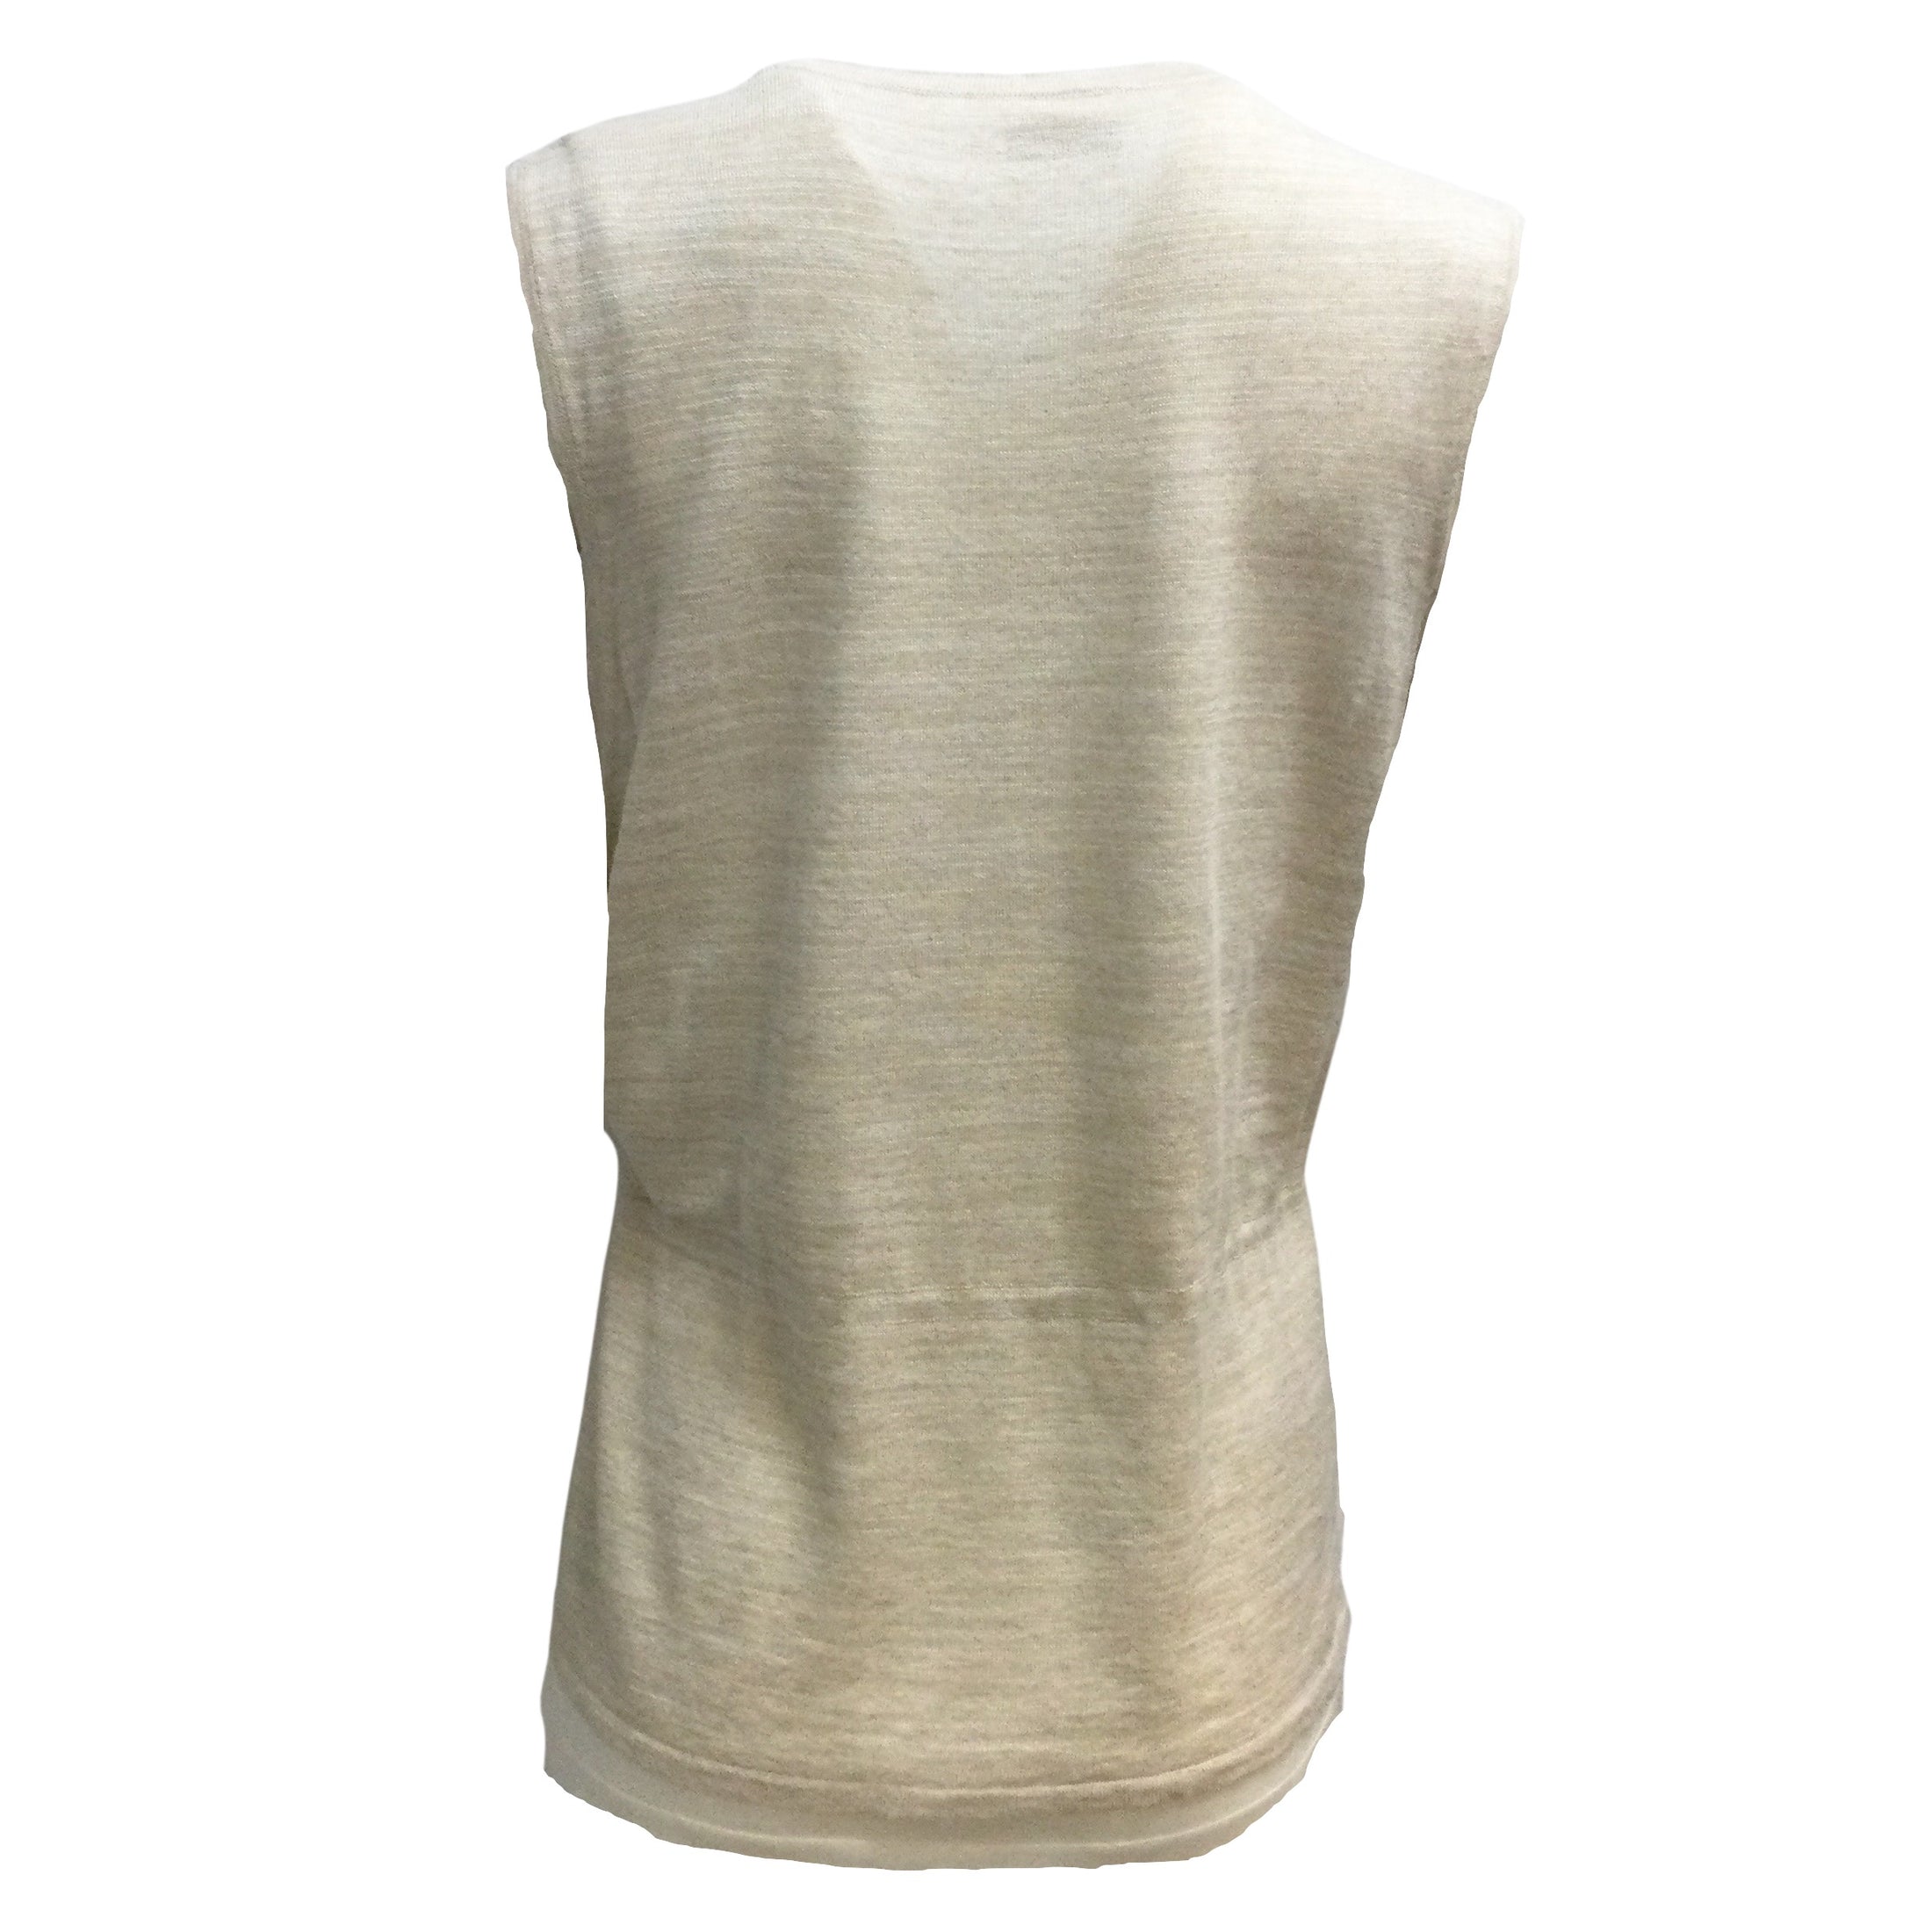 Akris Layered Button-down Sleeveless V-neck Cardigan Oat Beige / White Sweater